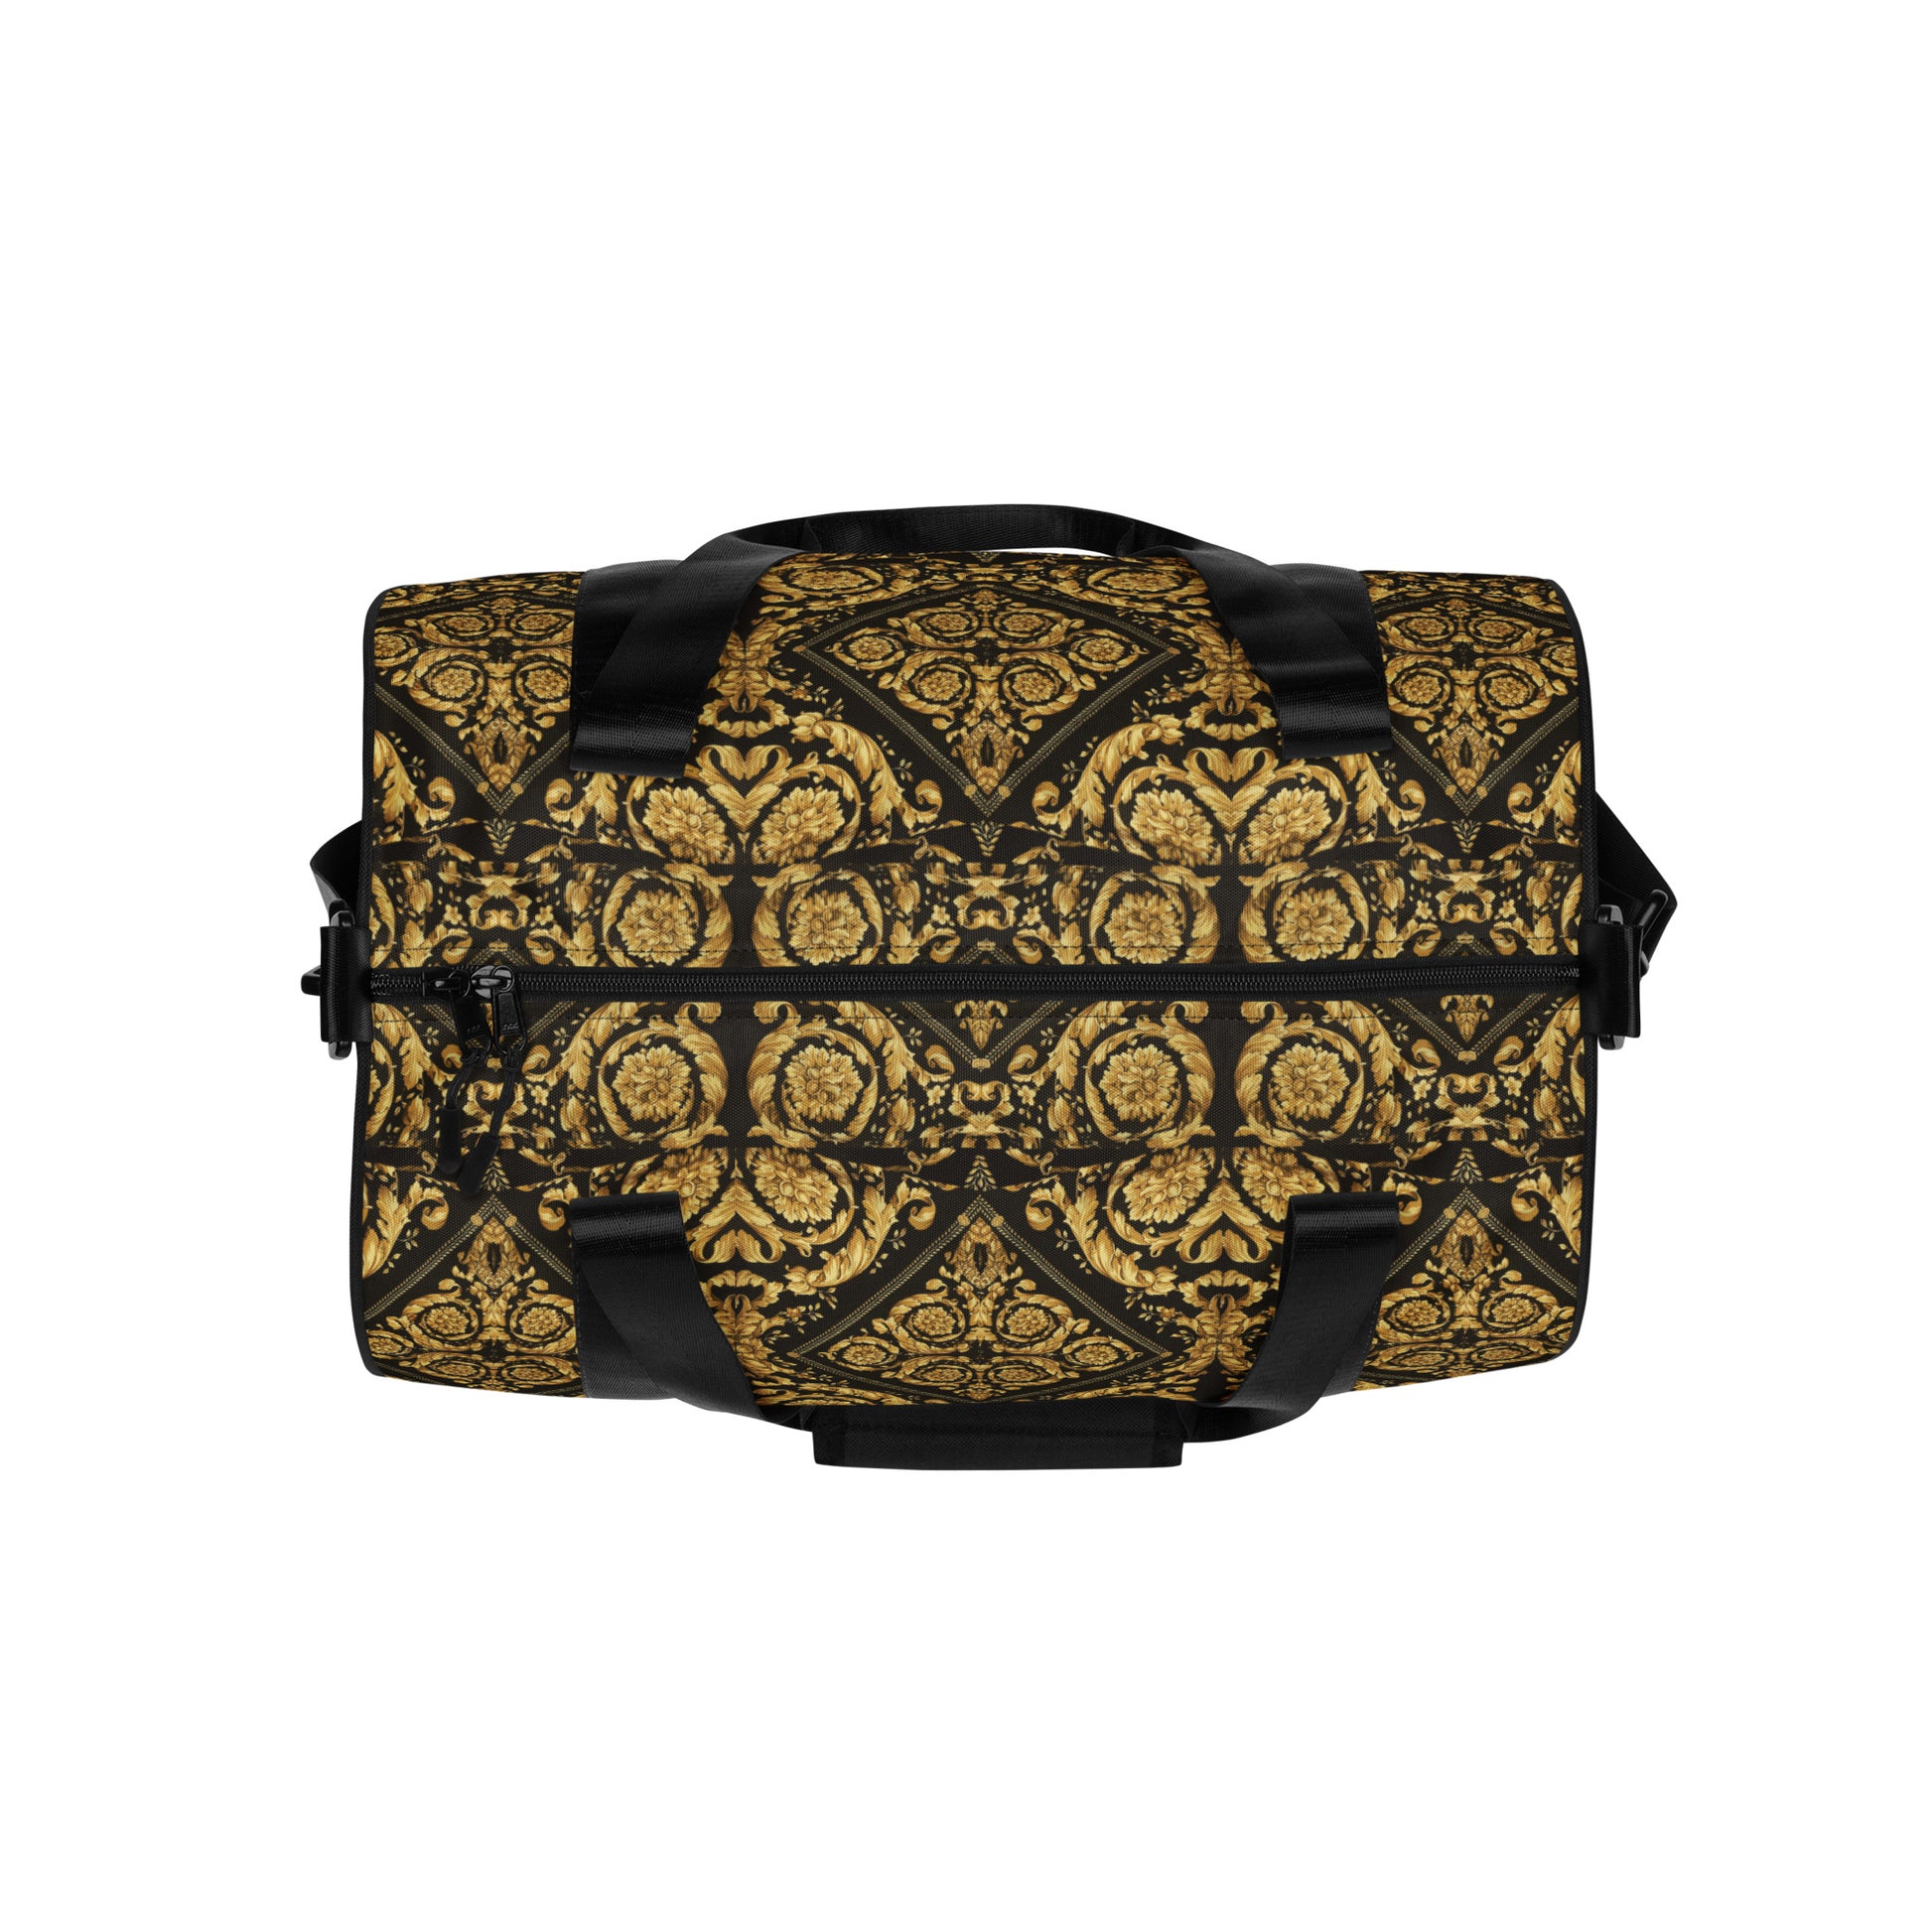 Baroque Gold Scarf Print Gym Bag - HipHatter